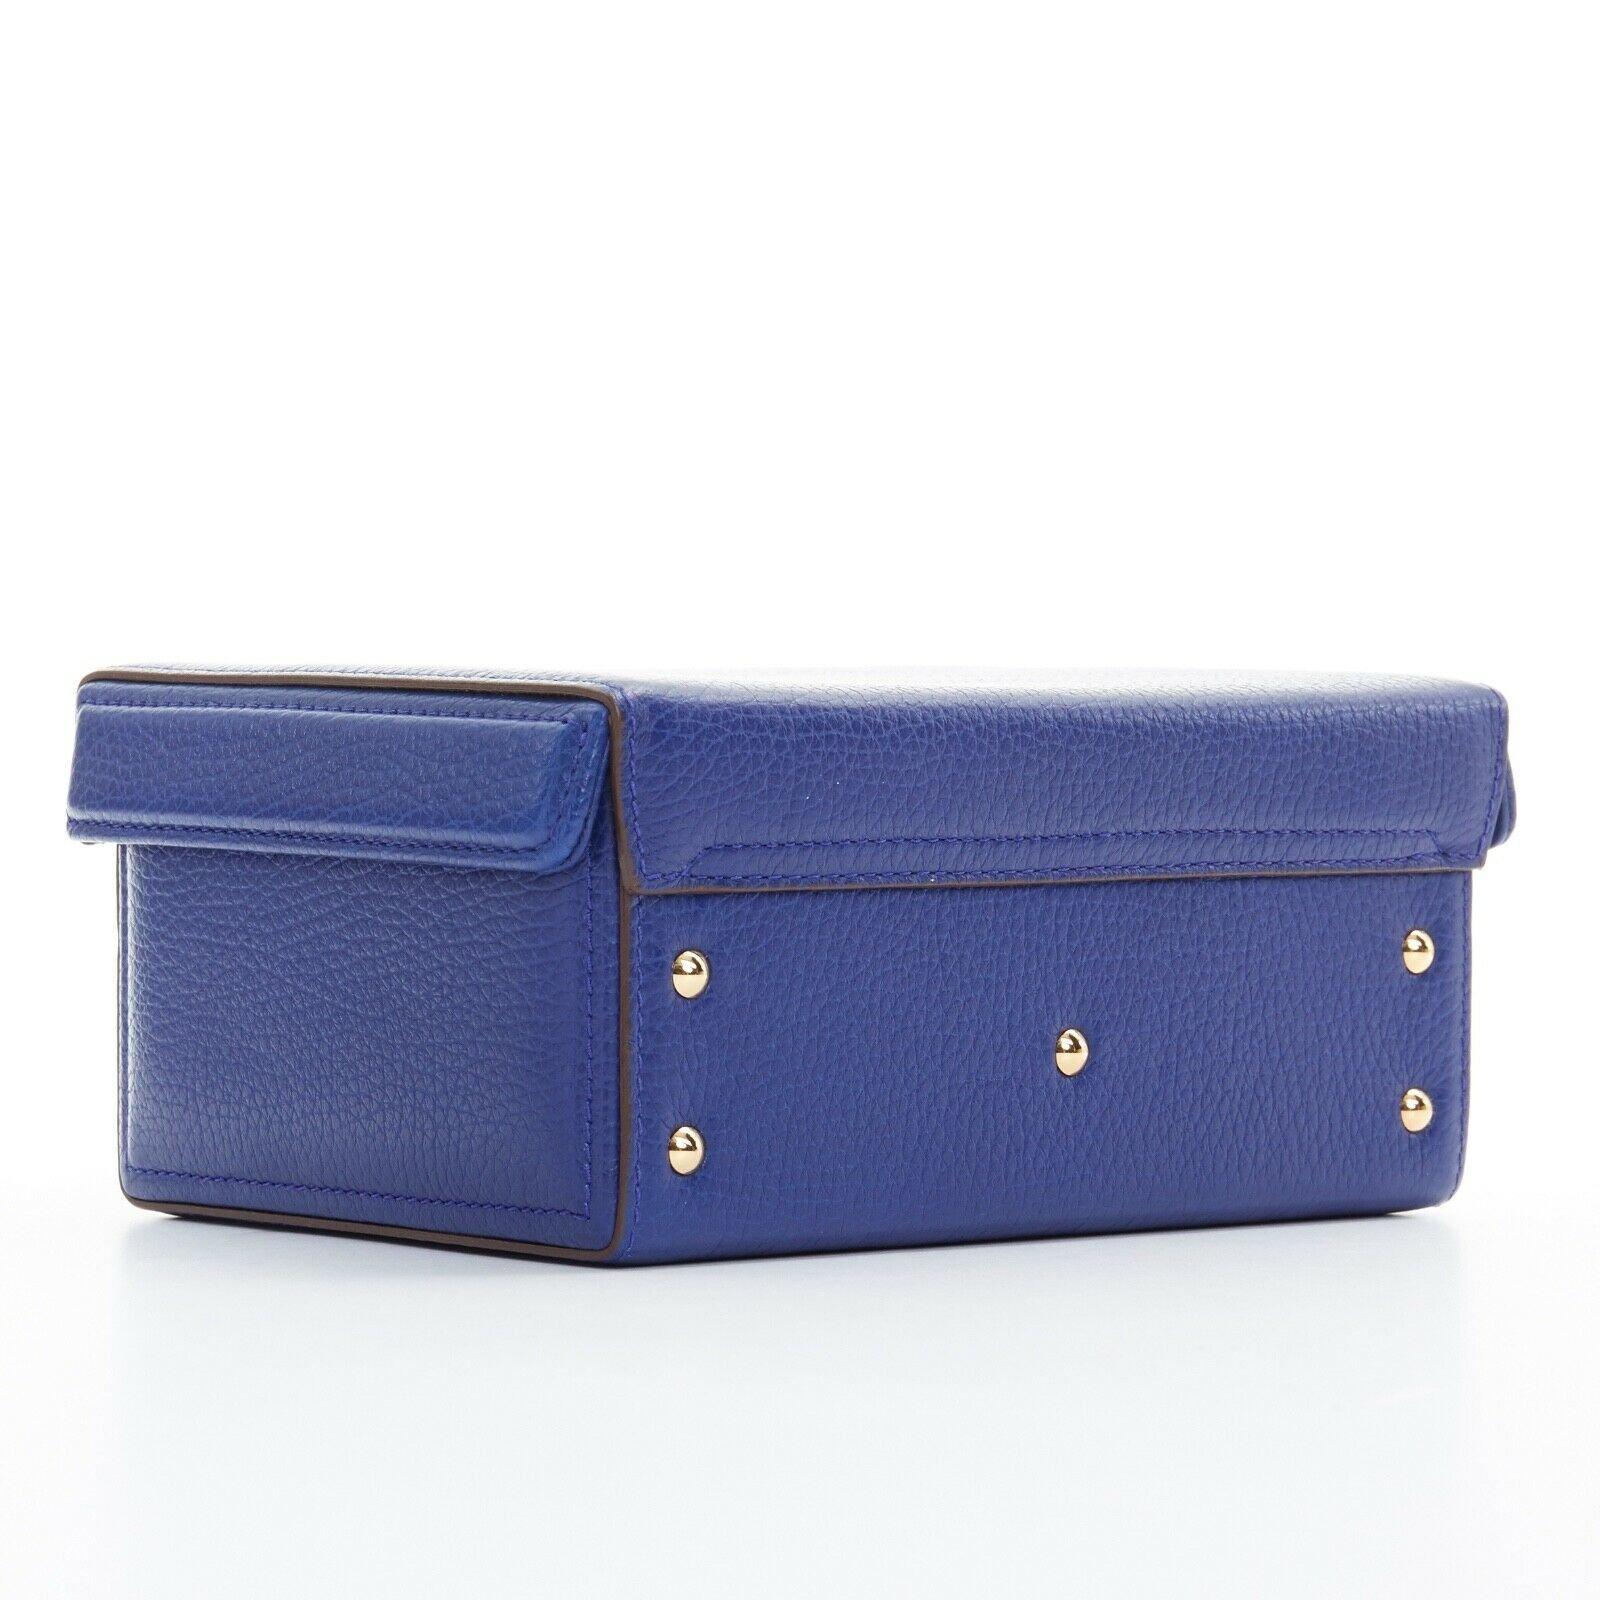 MARK CROSS Grace Box blue purple leather gold lock medium shoulder trunk bag 1